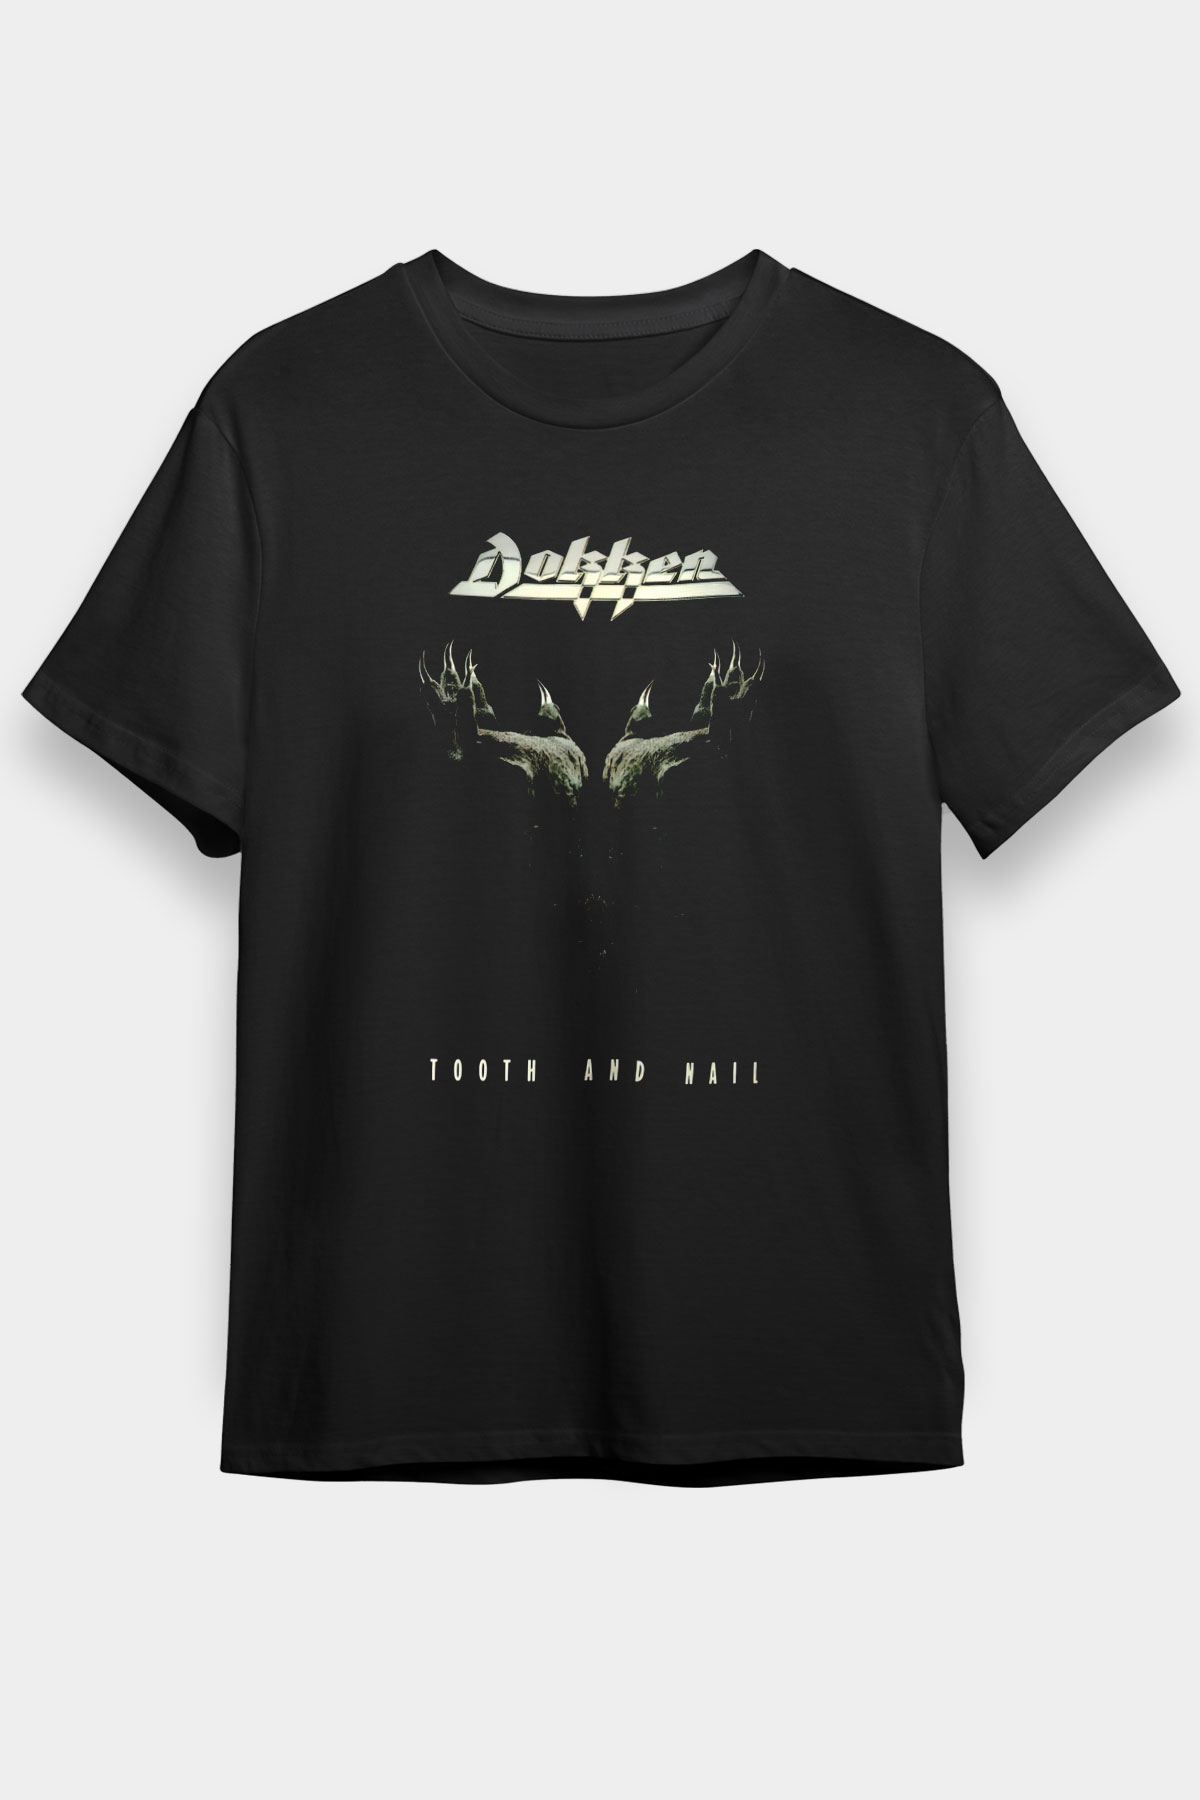 Dokken Black Unisex T-Shirt - Tees - Shirts